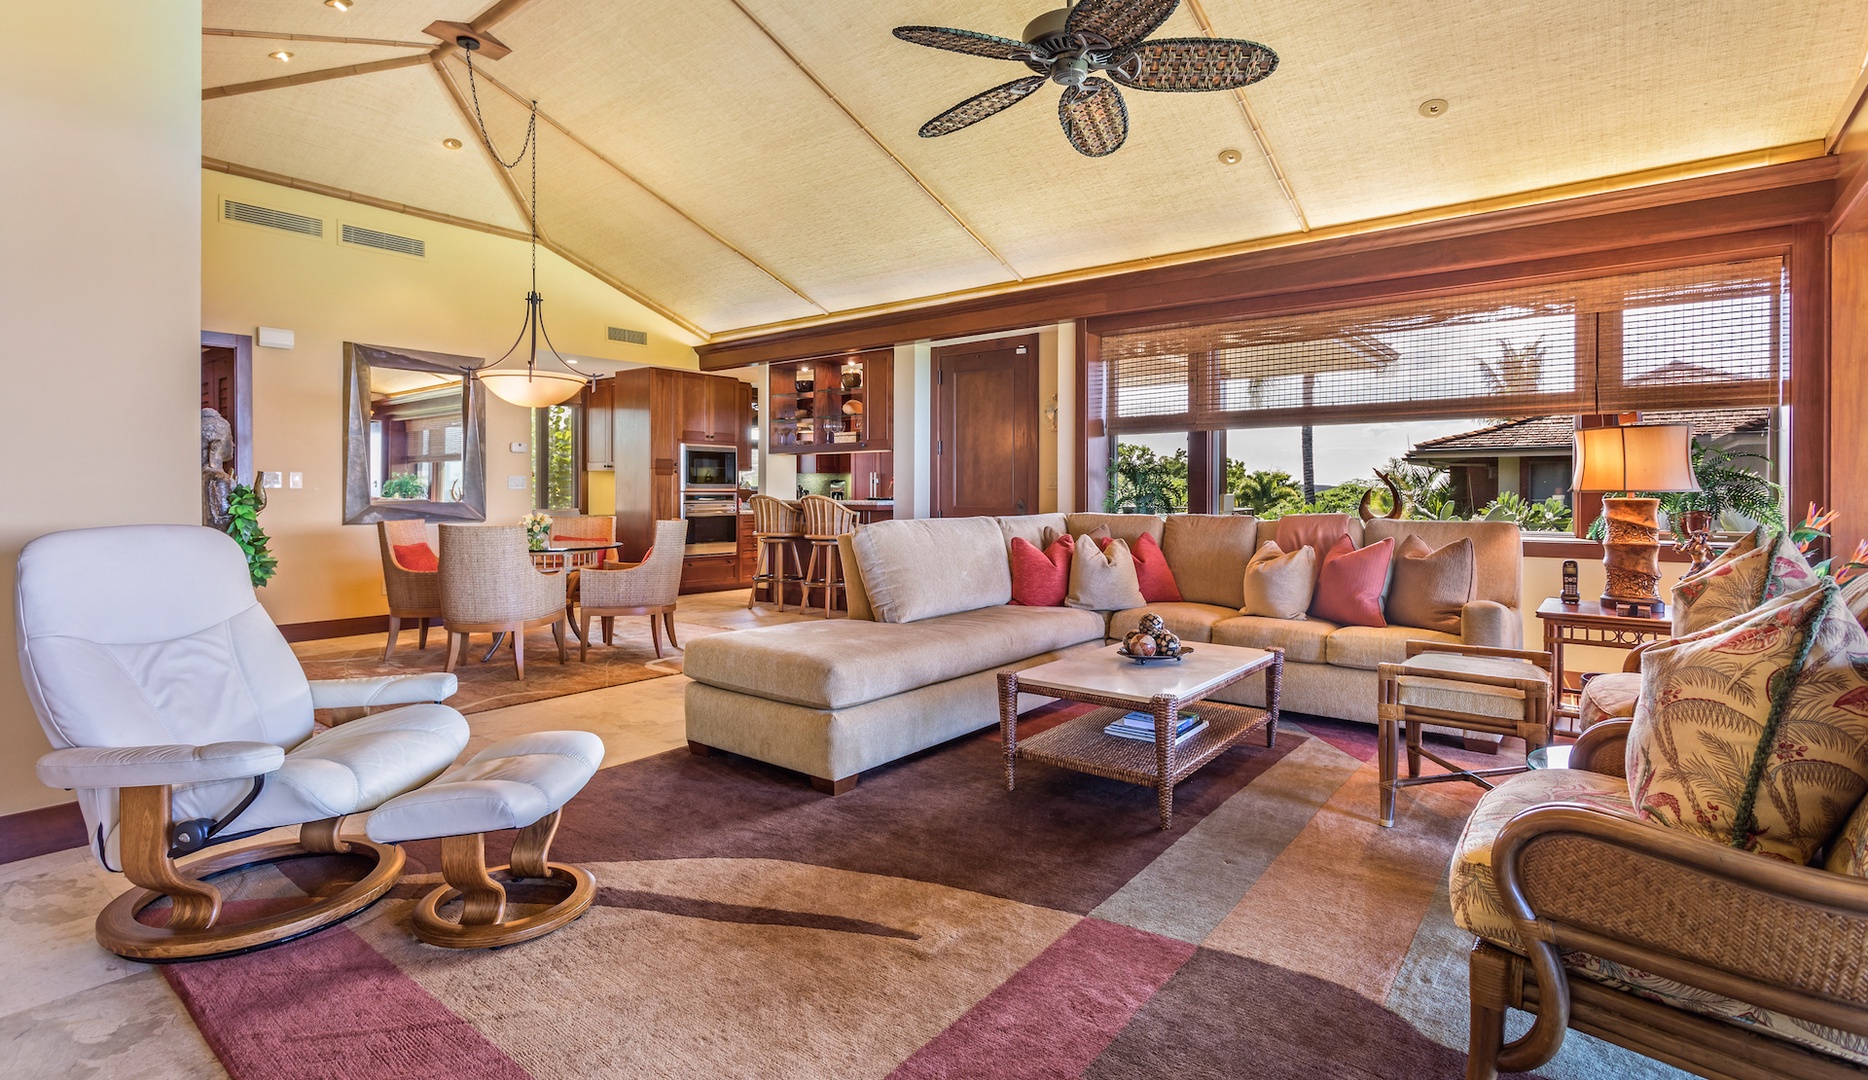 Kailua Kona Vacation Rentals, 2BD Hainoa Villa (2907B) at Four Seasons Resort at Hualalai - Open Floor Plan Great Room w/Living Area, Dining Area & Kitchen in Background.